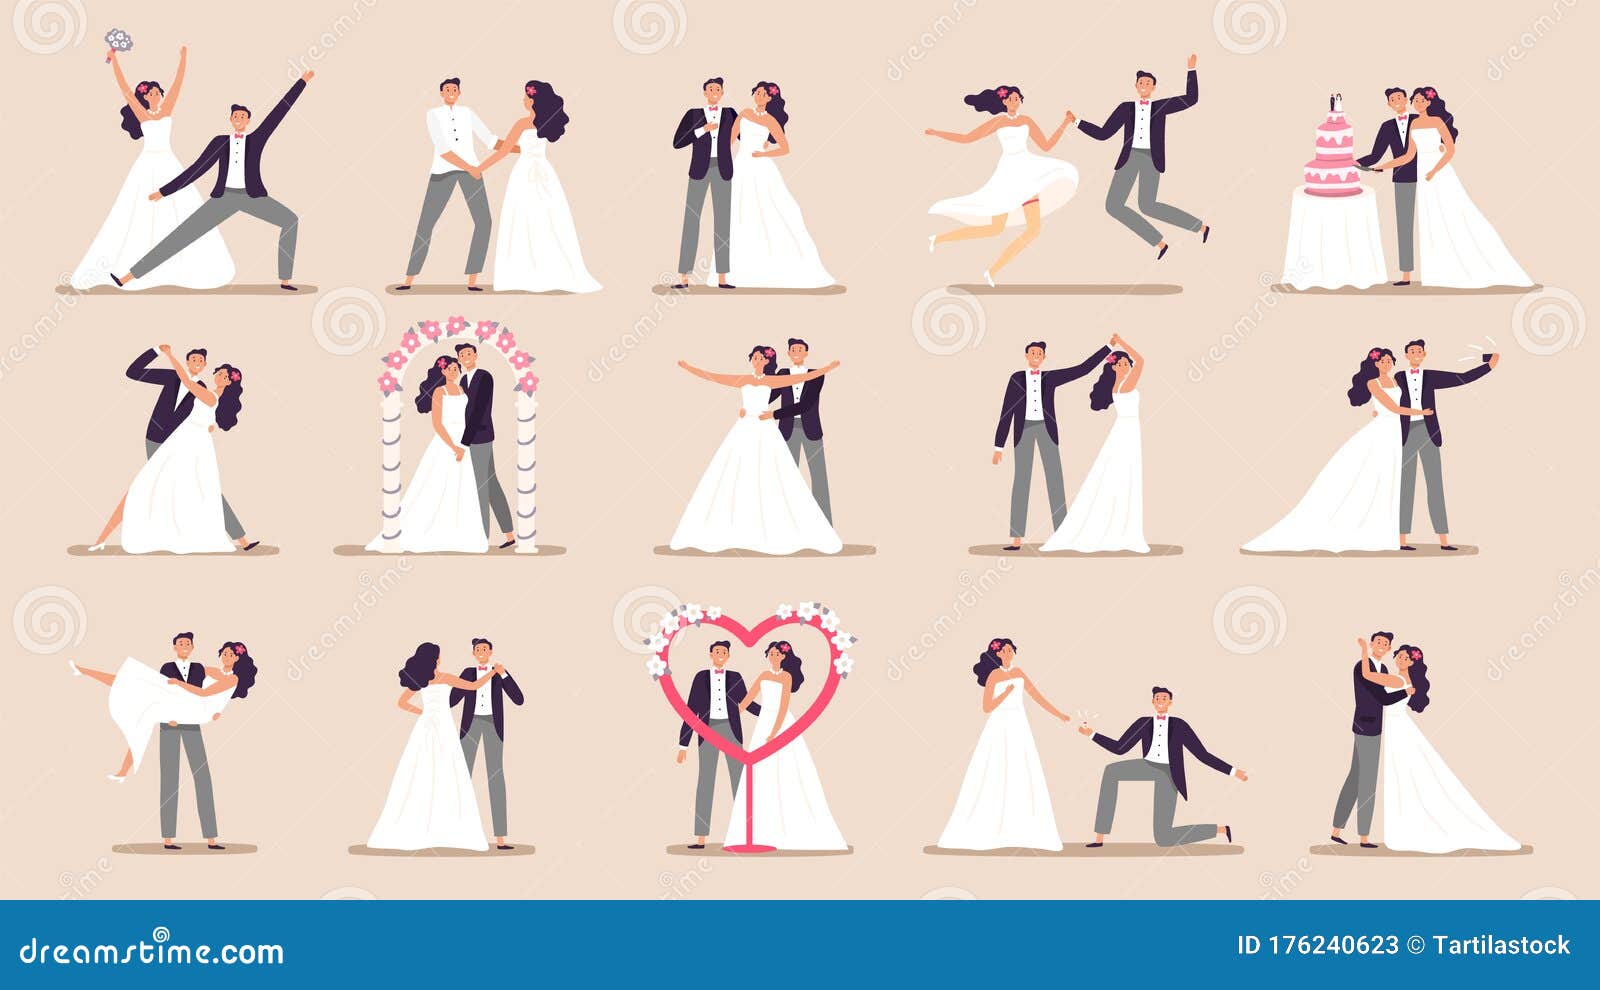 https://thumbs.dreamstime.com/z/wedding-couples-bride-dress-just-married-couple-marriage-ceremony-cartoon-vector-illustration-set-groom-176240623.jpg